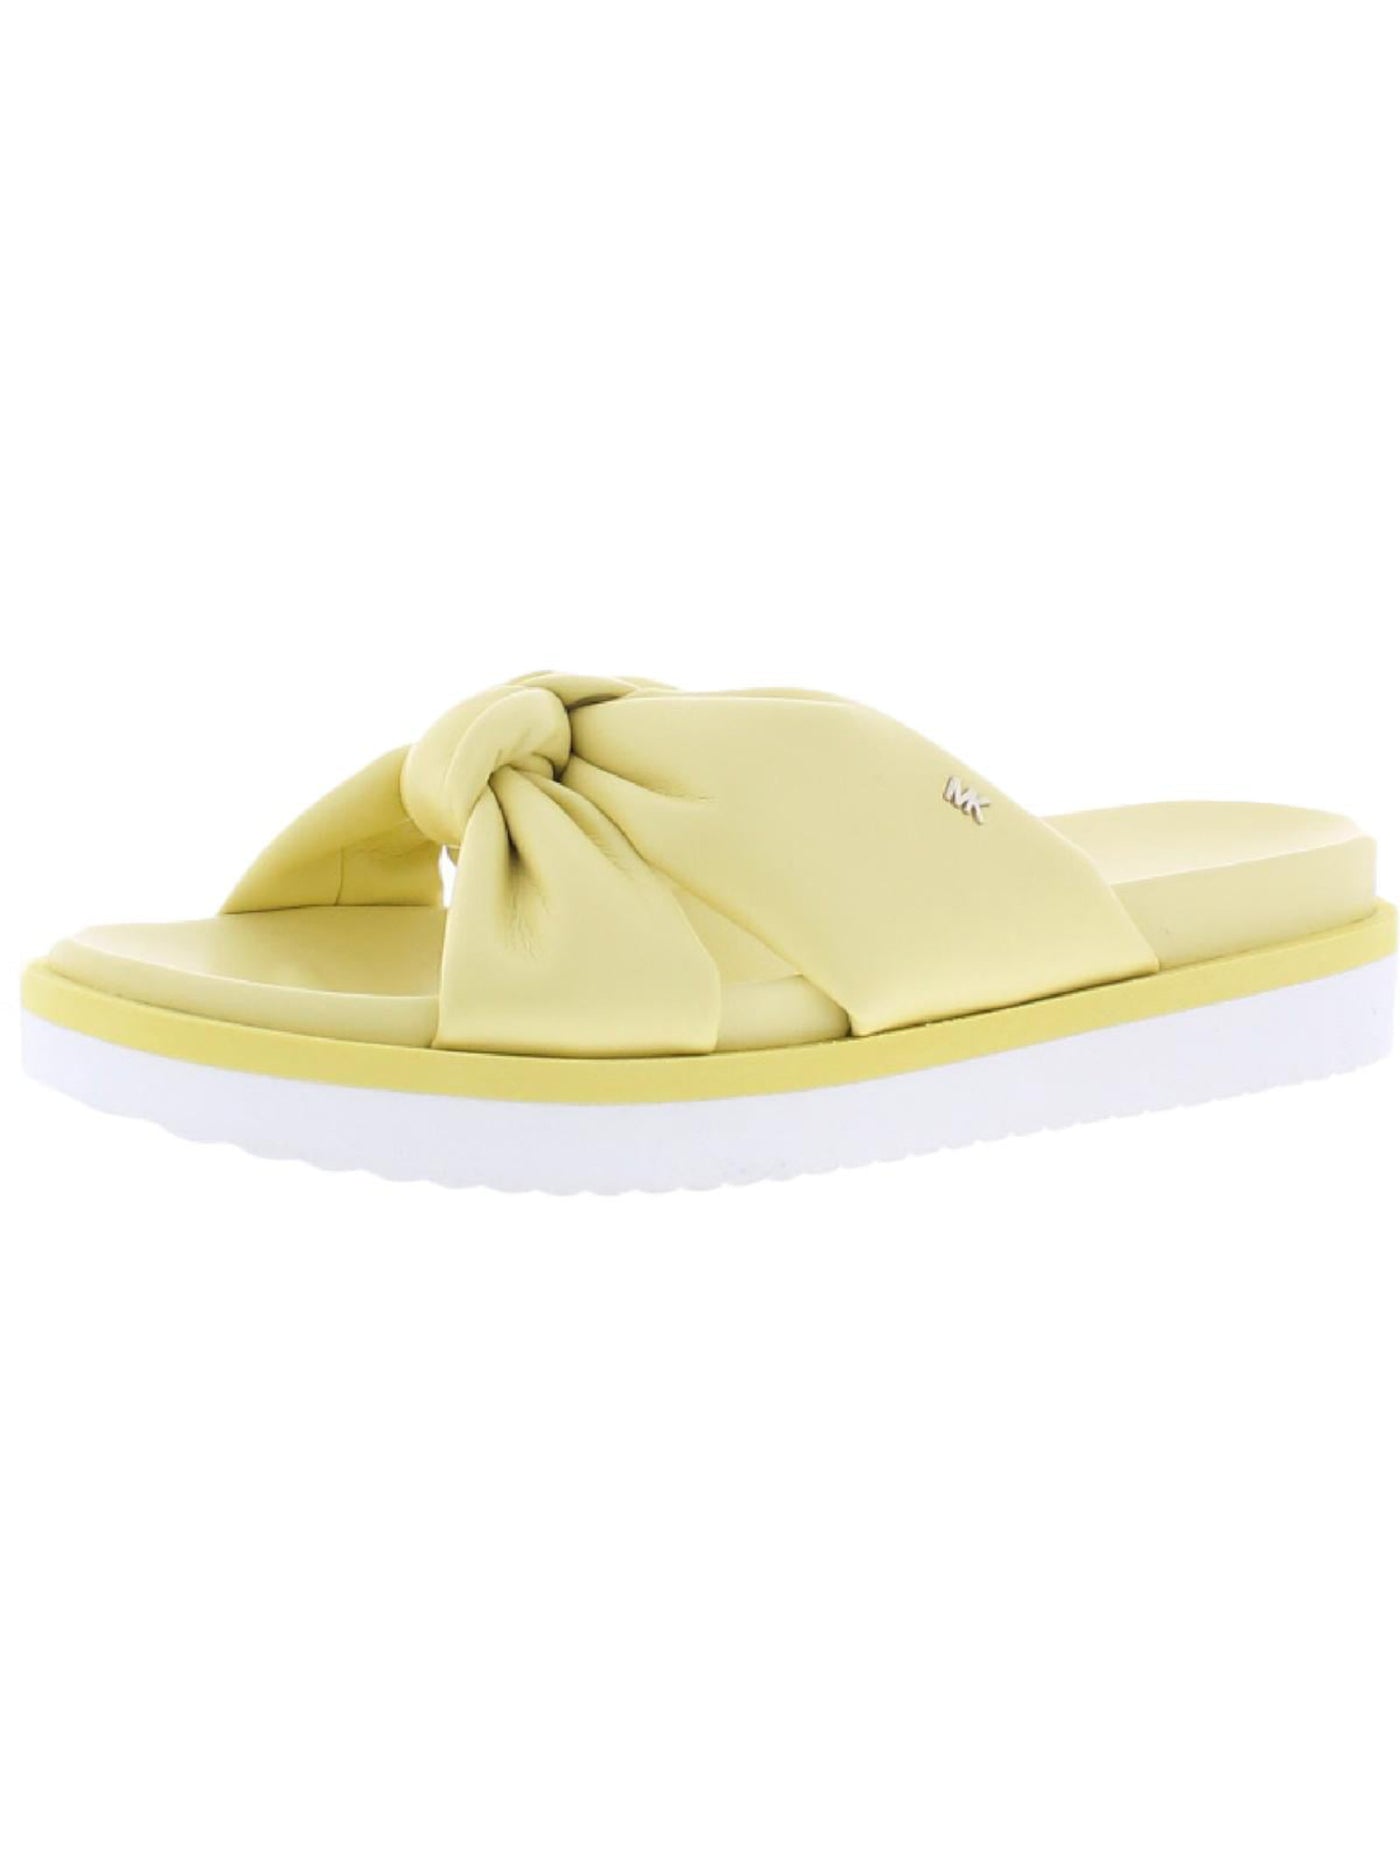 MICHAEL KORS Womens Yellow Knot 1" Platform Comfort Josie Round Toe Wedge Slip On Slide Sandals 7.5 M